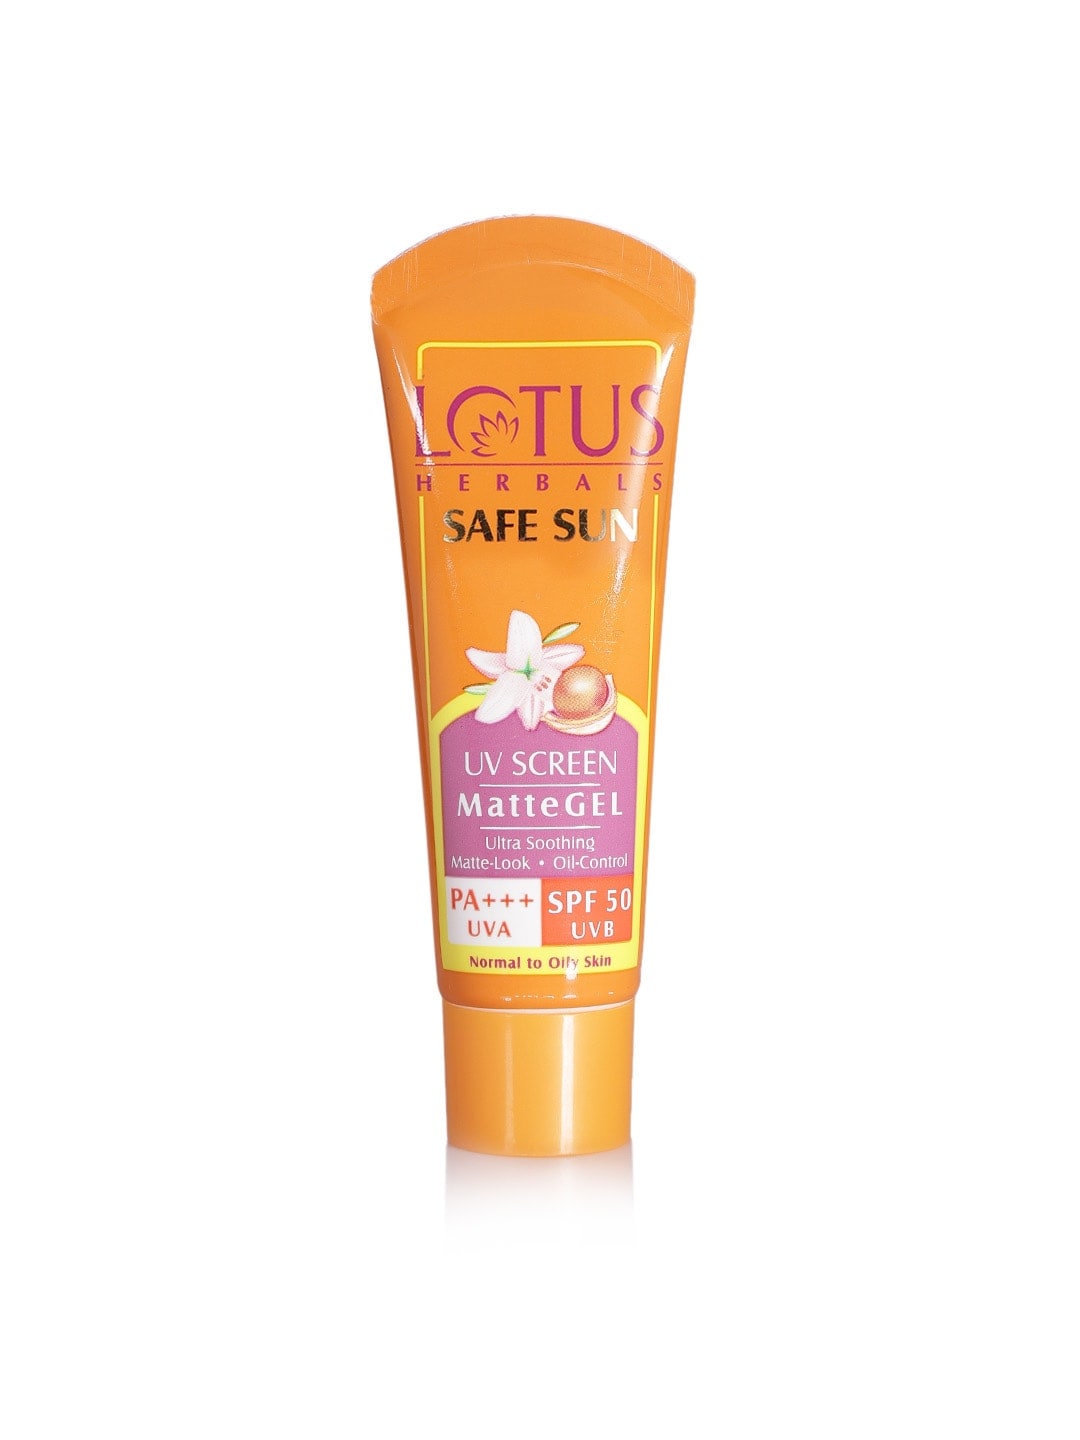 Lotus Herbals Unisex Safe Sun SPF 50 UV Screen MatteGel Sunscreen - 30 g